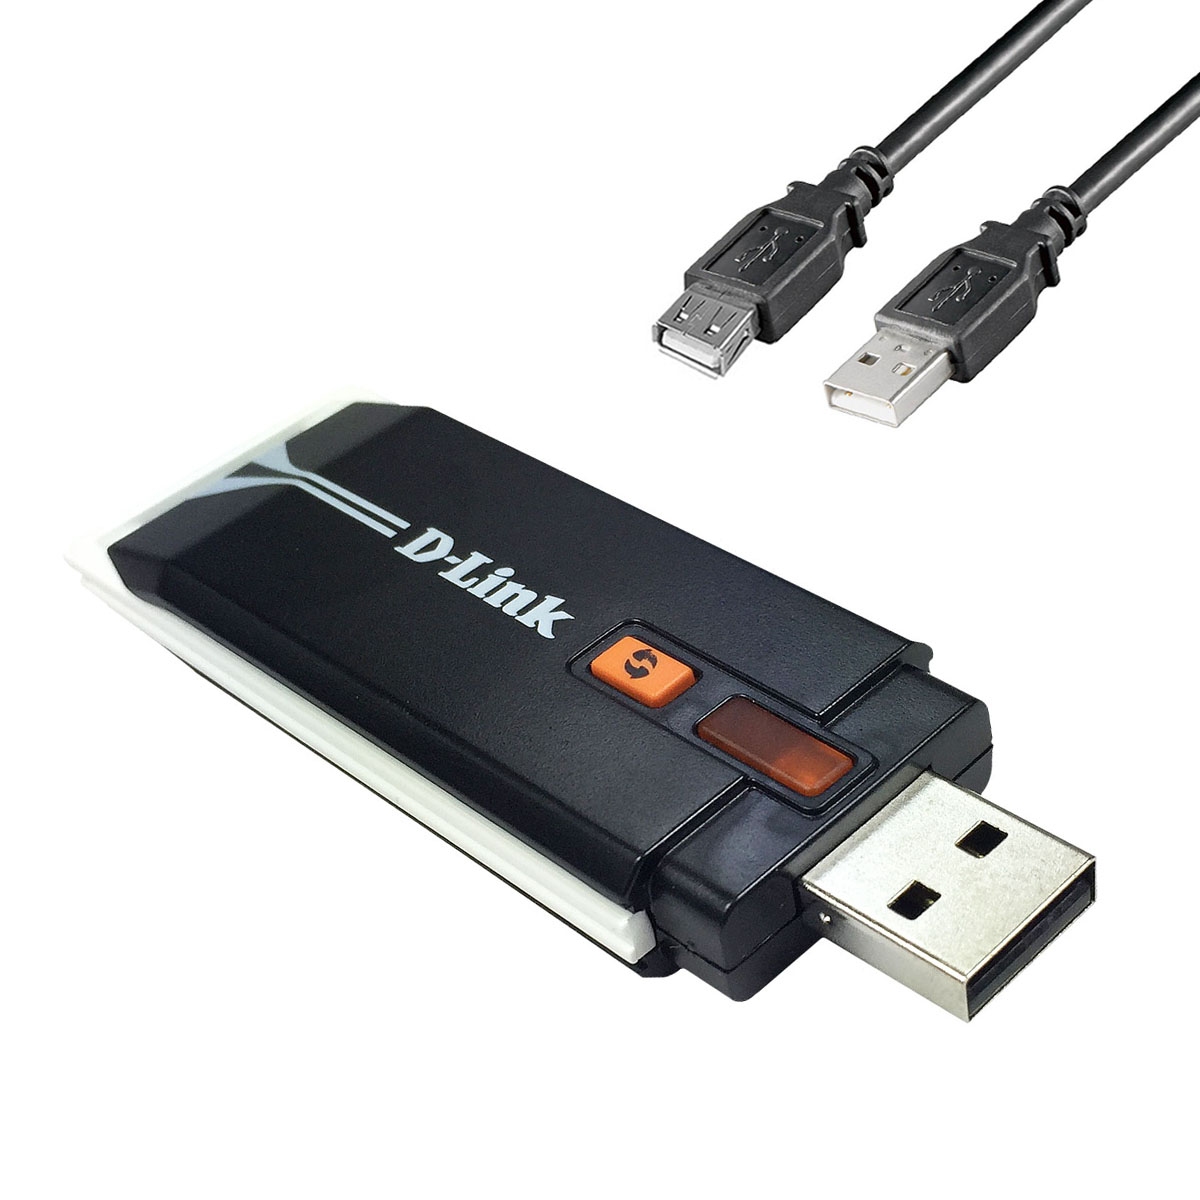 DLink dwa140/de 300 Mbit WiFi Stick USB 2.0 Wireless PC adaptador WLAN Dlink Top eBay